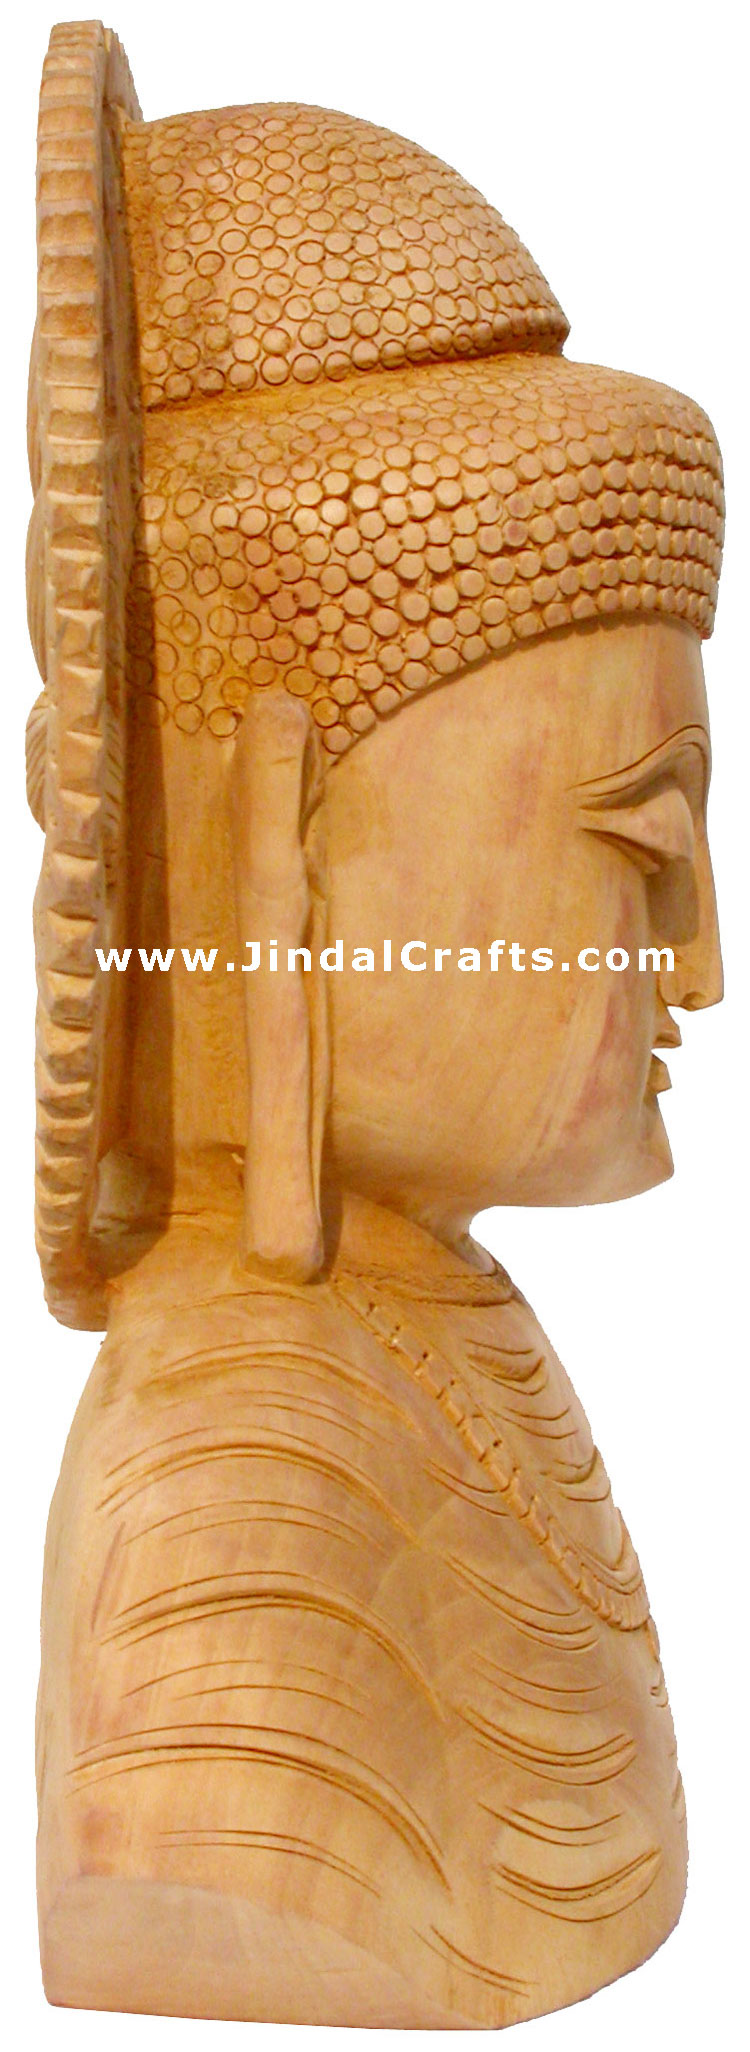 Handcrafted Wooden Buddha Sculpture Indian Artifact